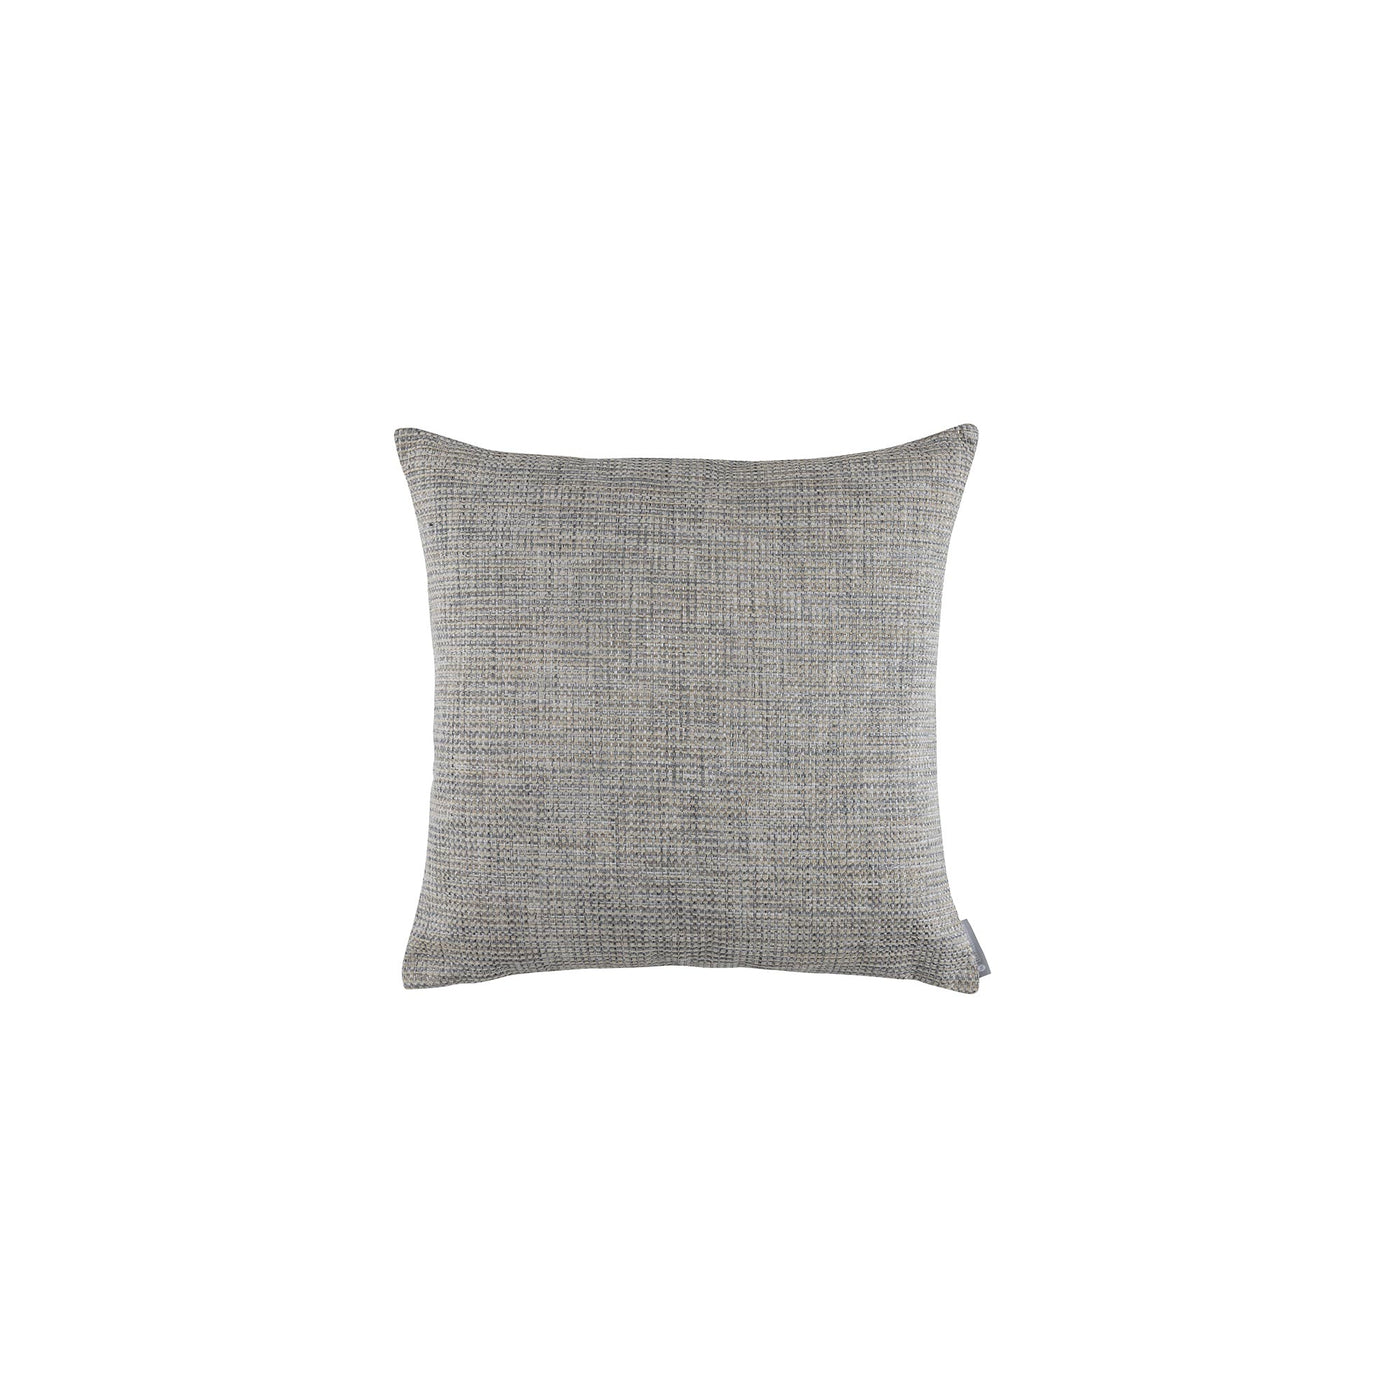 Tweed Travertine European Pillow (26x26)